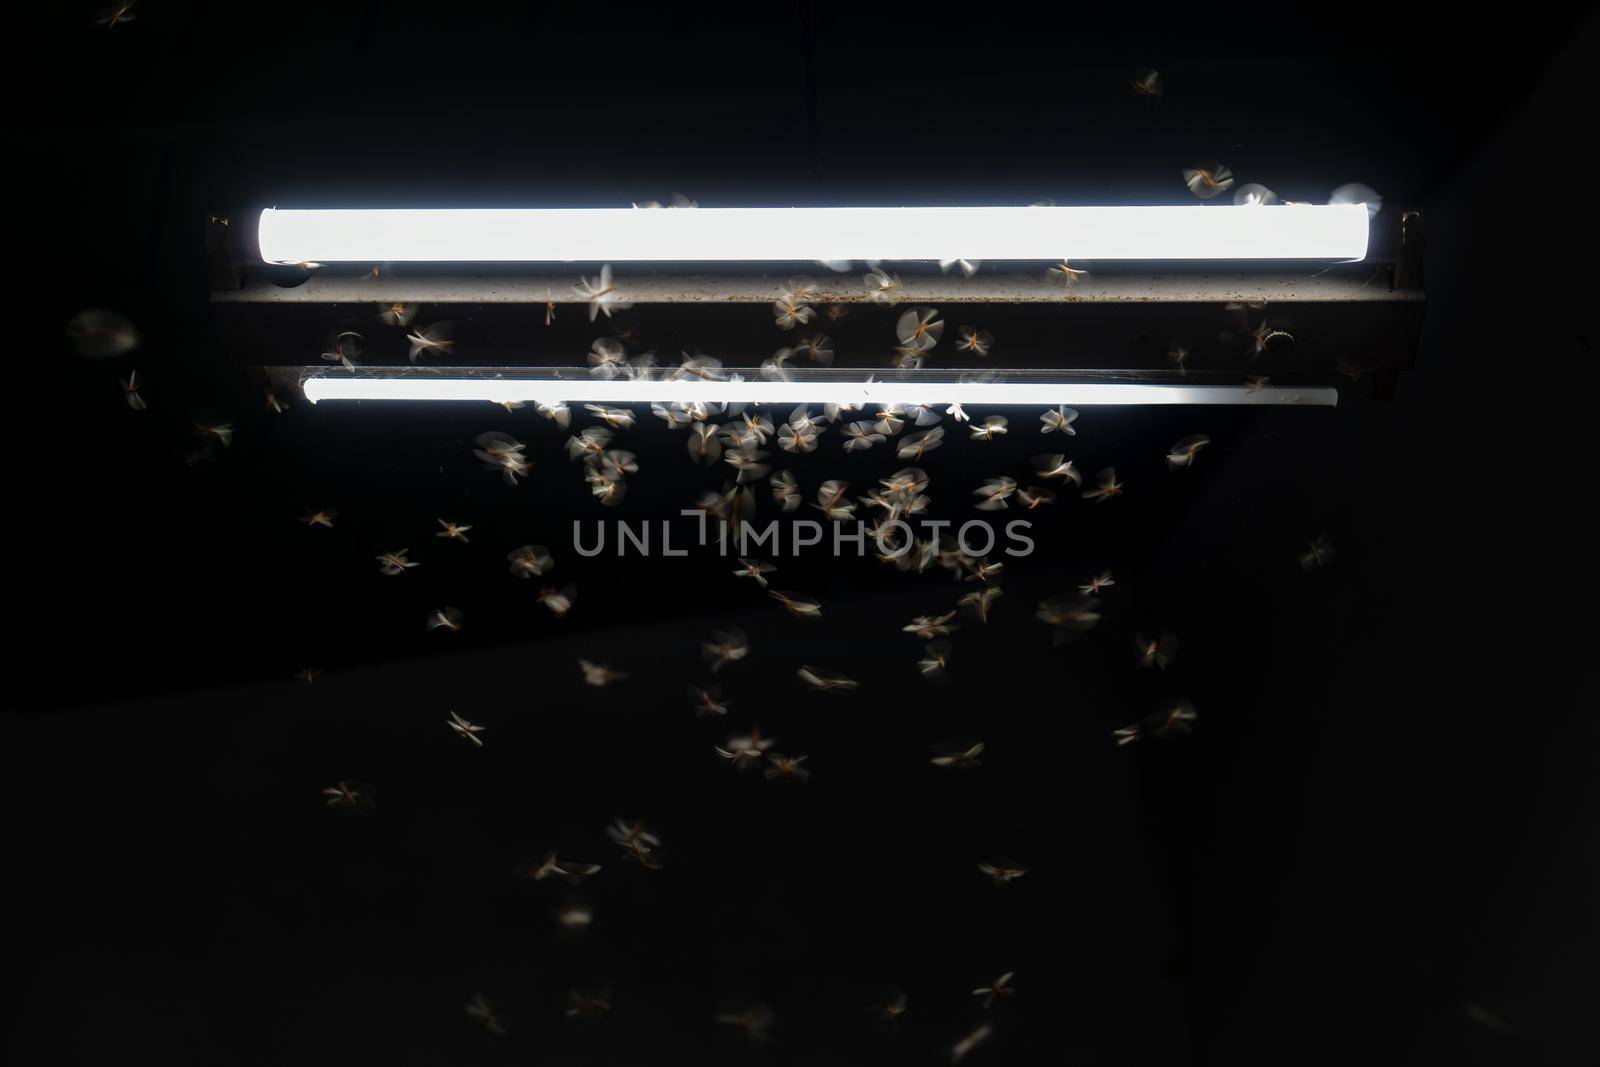 Termites by jrivalta